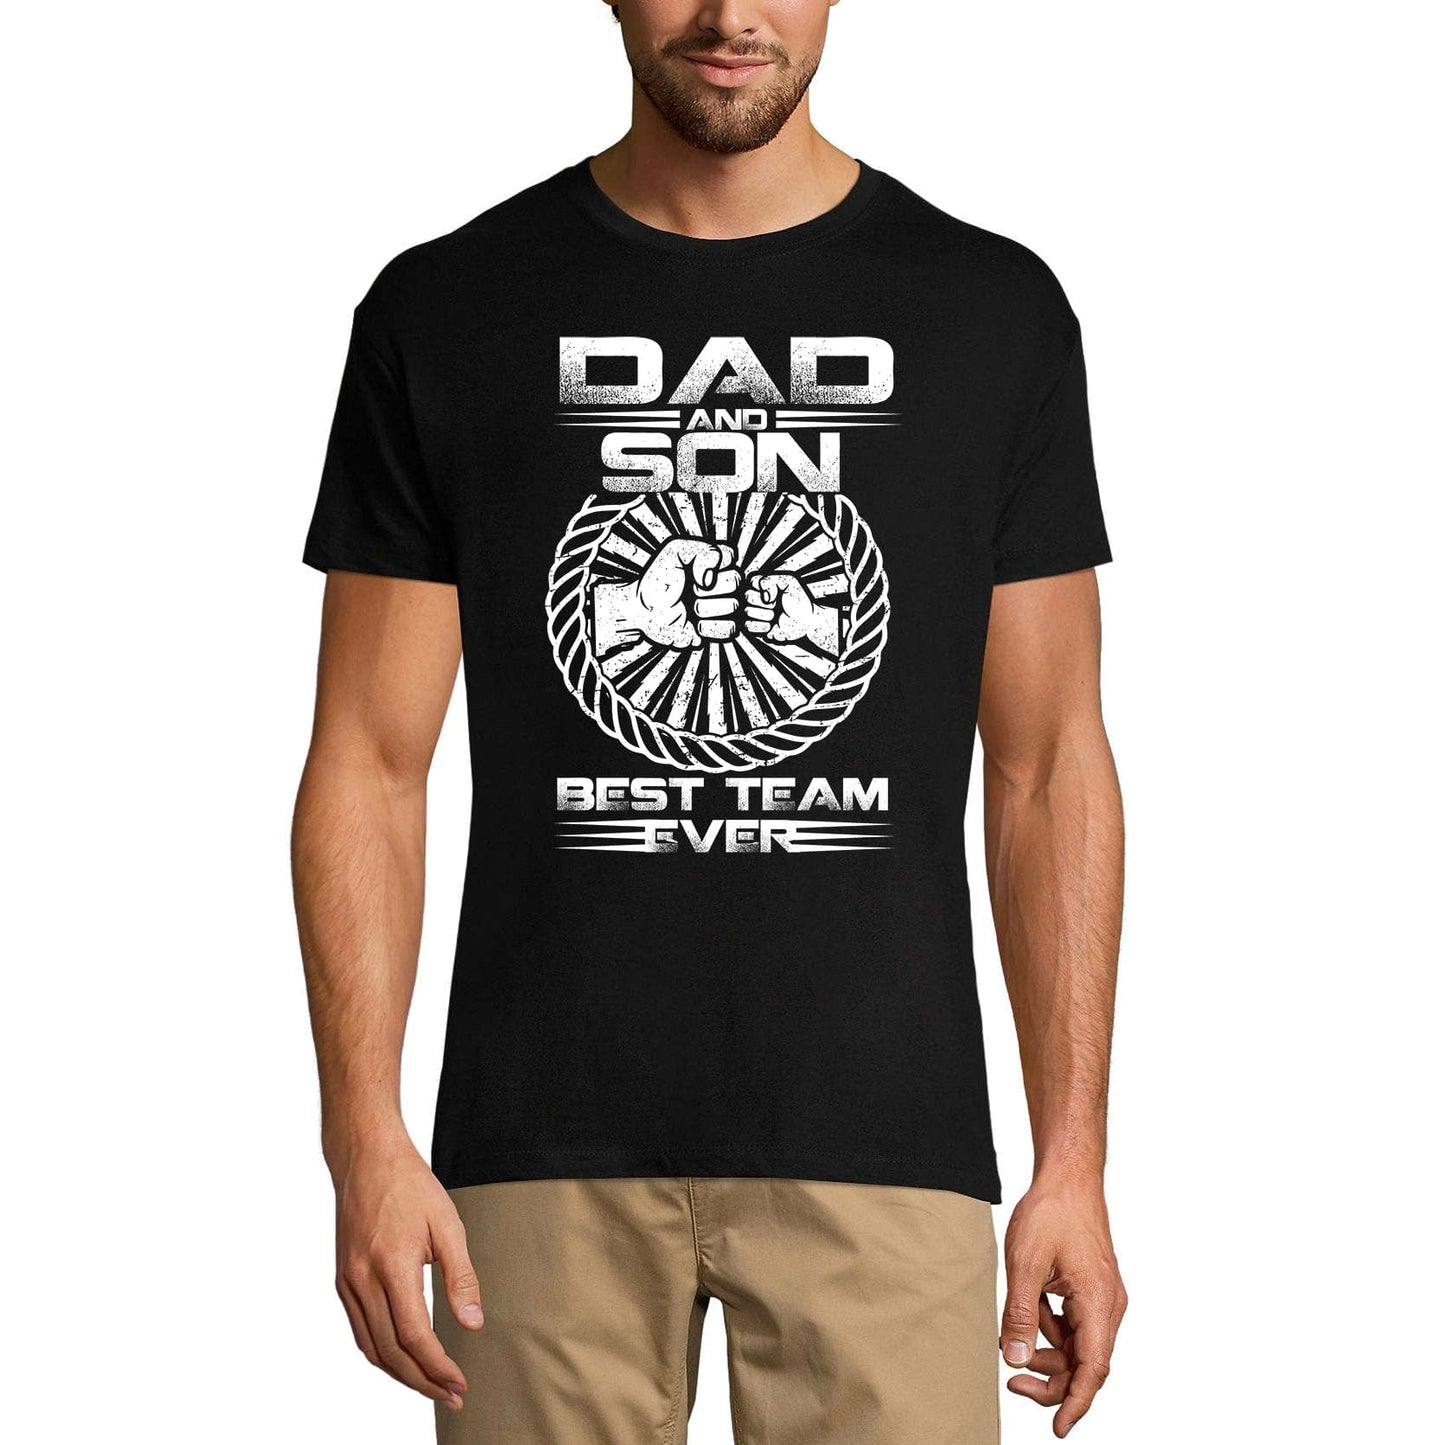 ULTRABASIC Men's Novelty T-Shirt Dad and Son Best Team Ever Tee Shirt